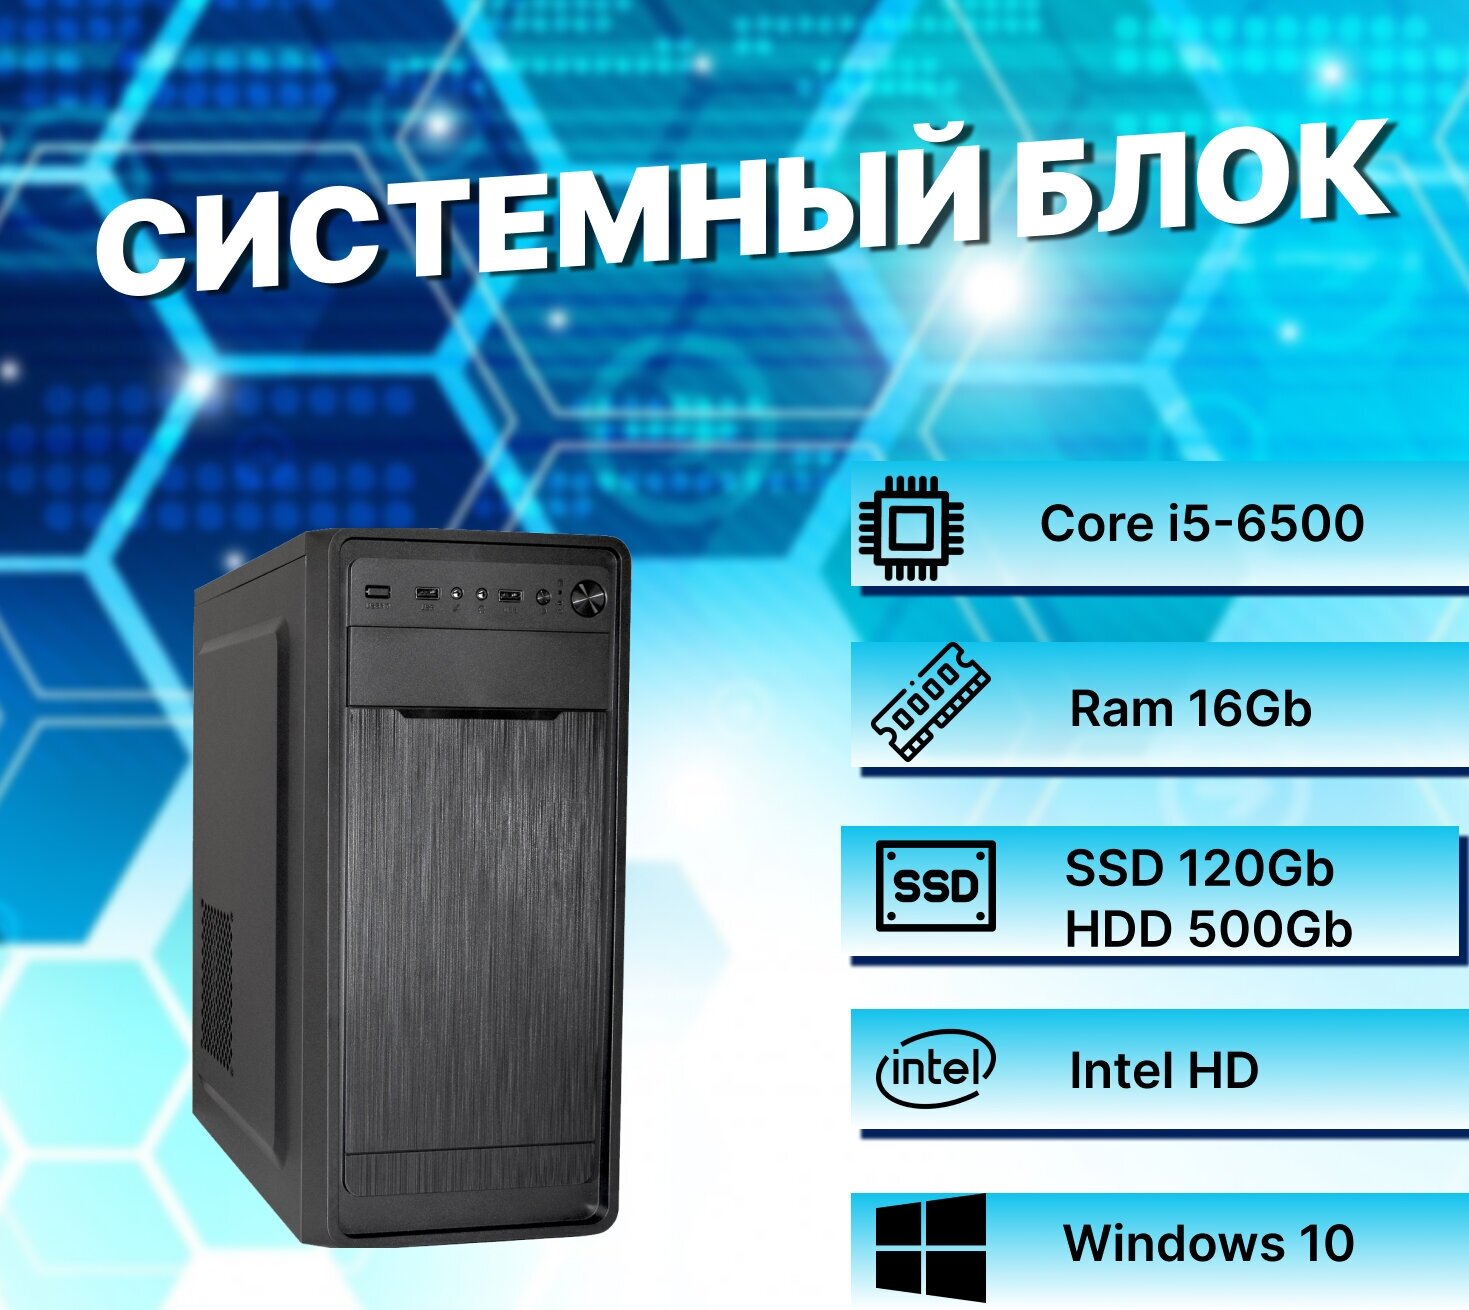 Системный блок Intel Core I5-6500 (3.2ГГц)/ RAM 16Gb/ SSD 120Gb/ HDD 500Gb/ Intel HD/ Windows 10 Pro